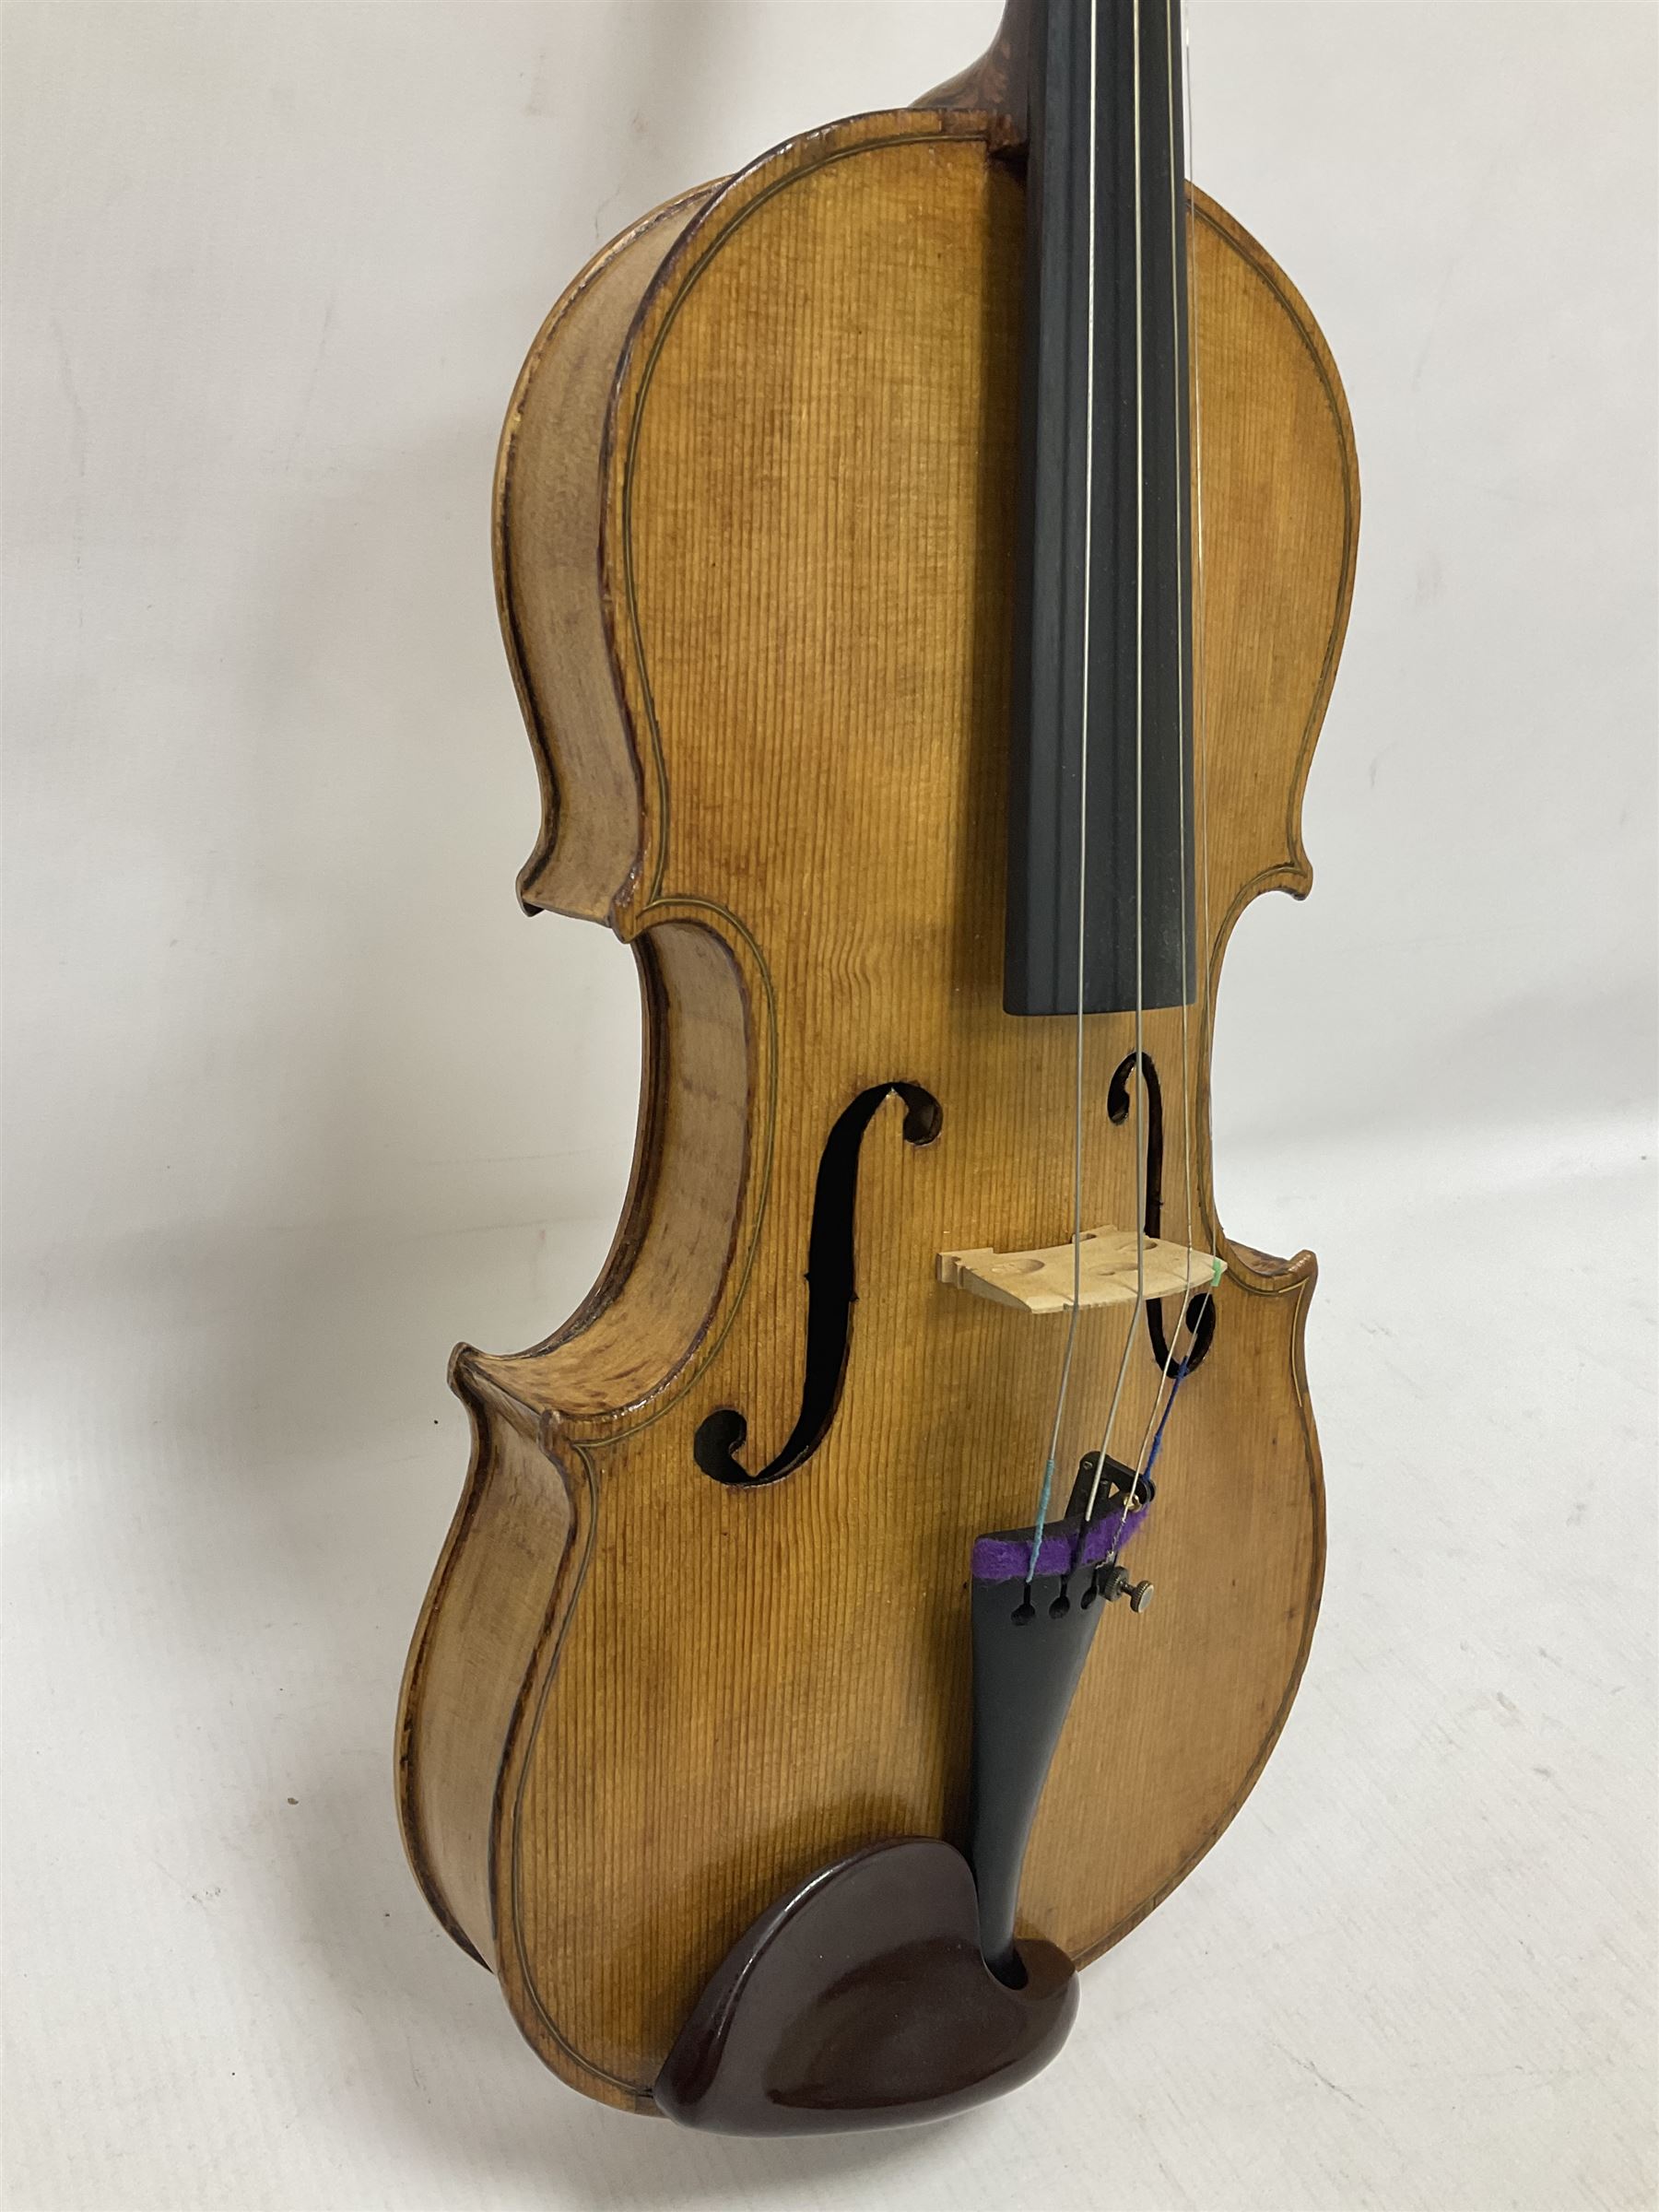 Copy of a full size Stradivarius violin - Image 8 of 12